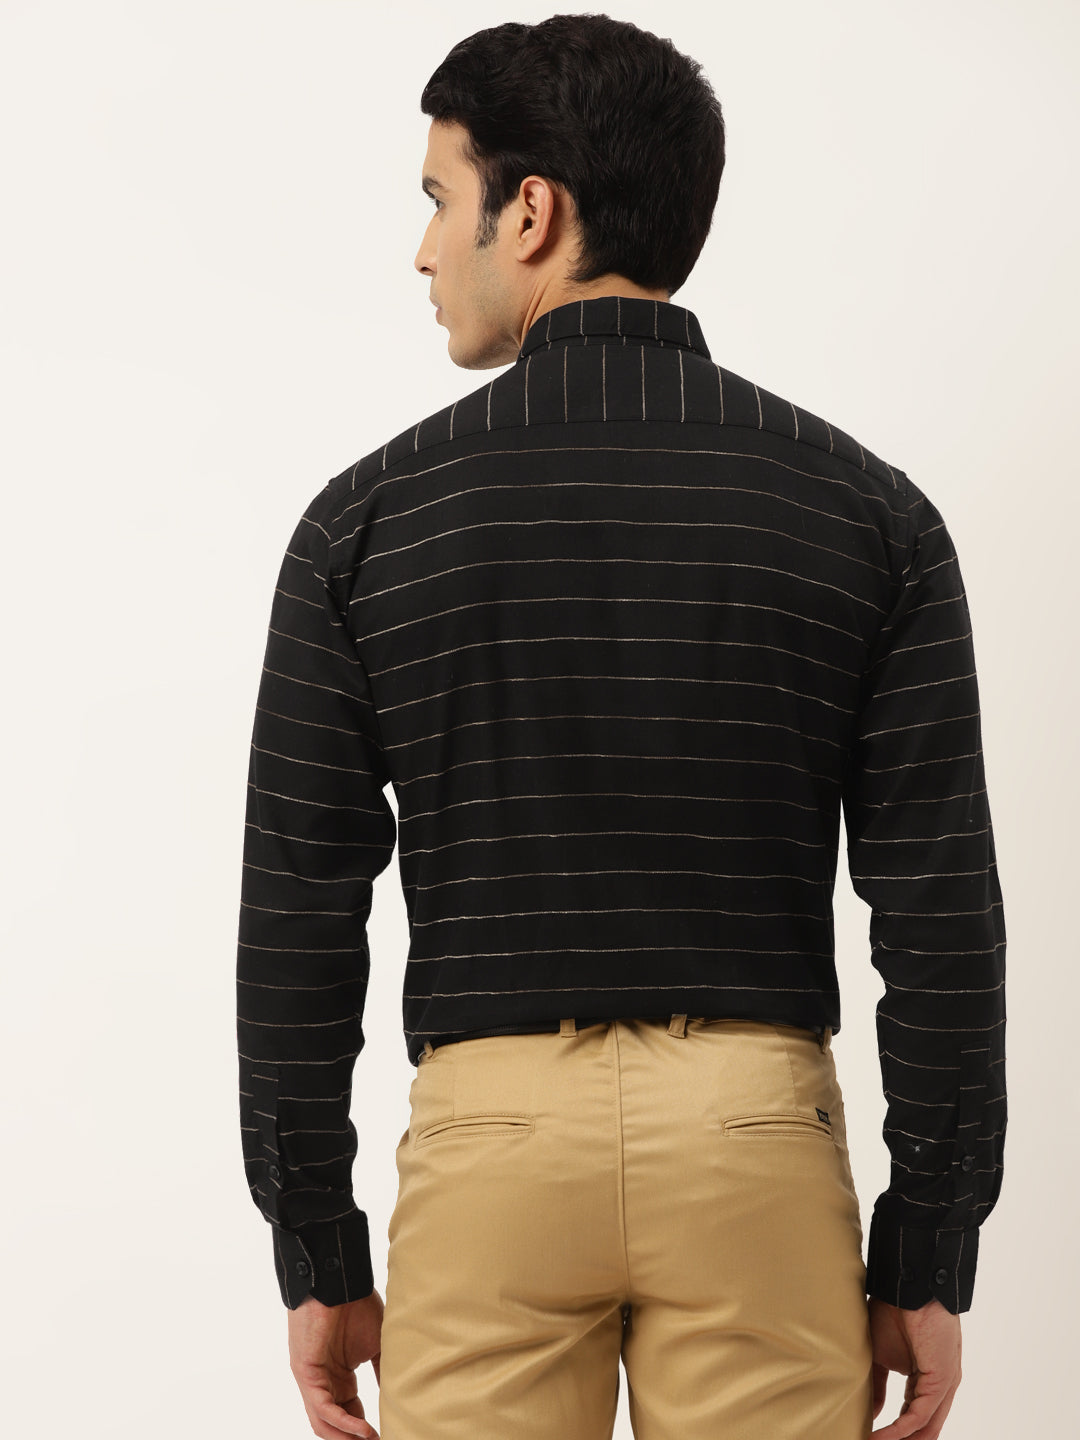 Men's Formal Cotton Horizontal Striped Shirt ( SF 790Black ) - Jainish